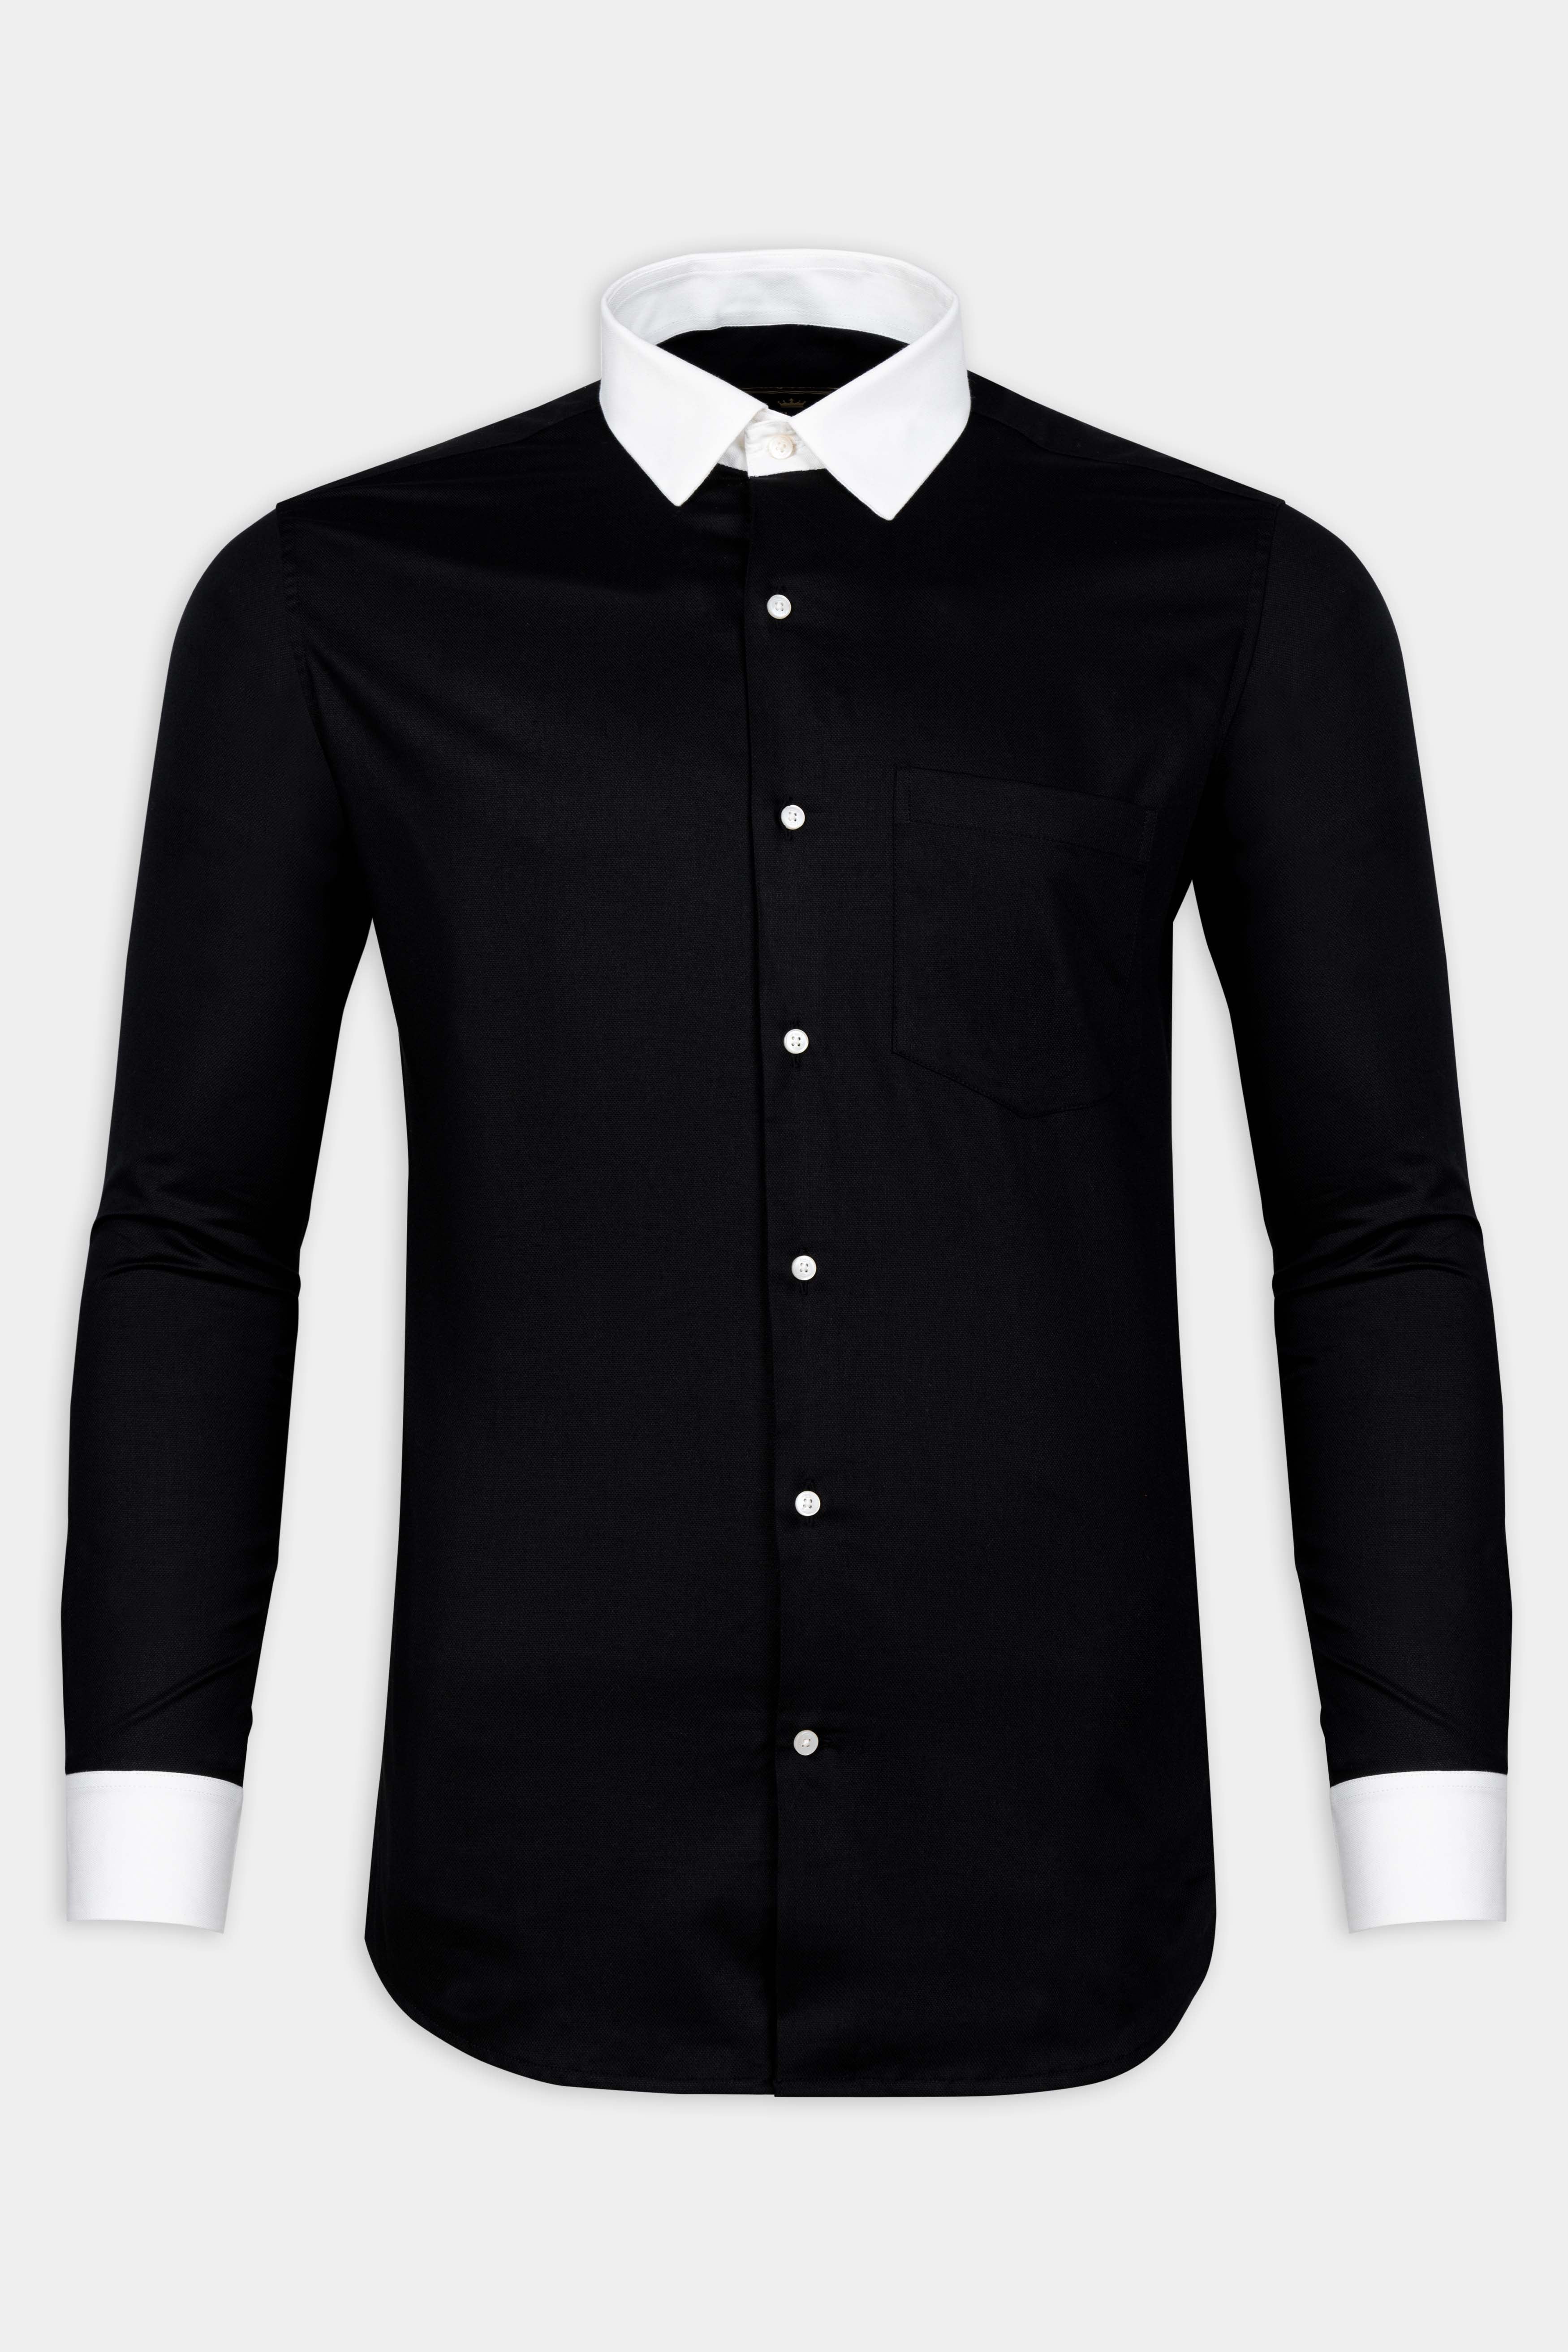 Jade Black with white cuff-collar Premium Cotton shirt